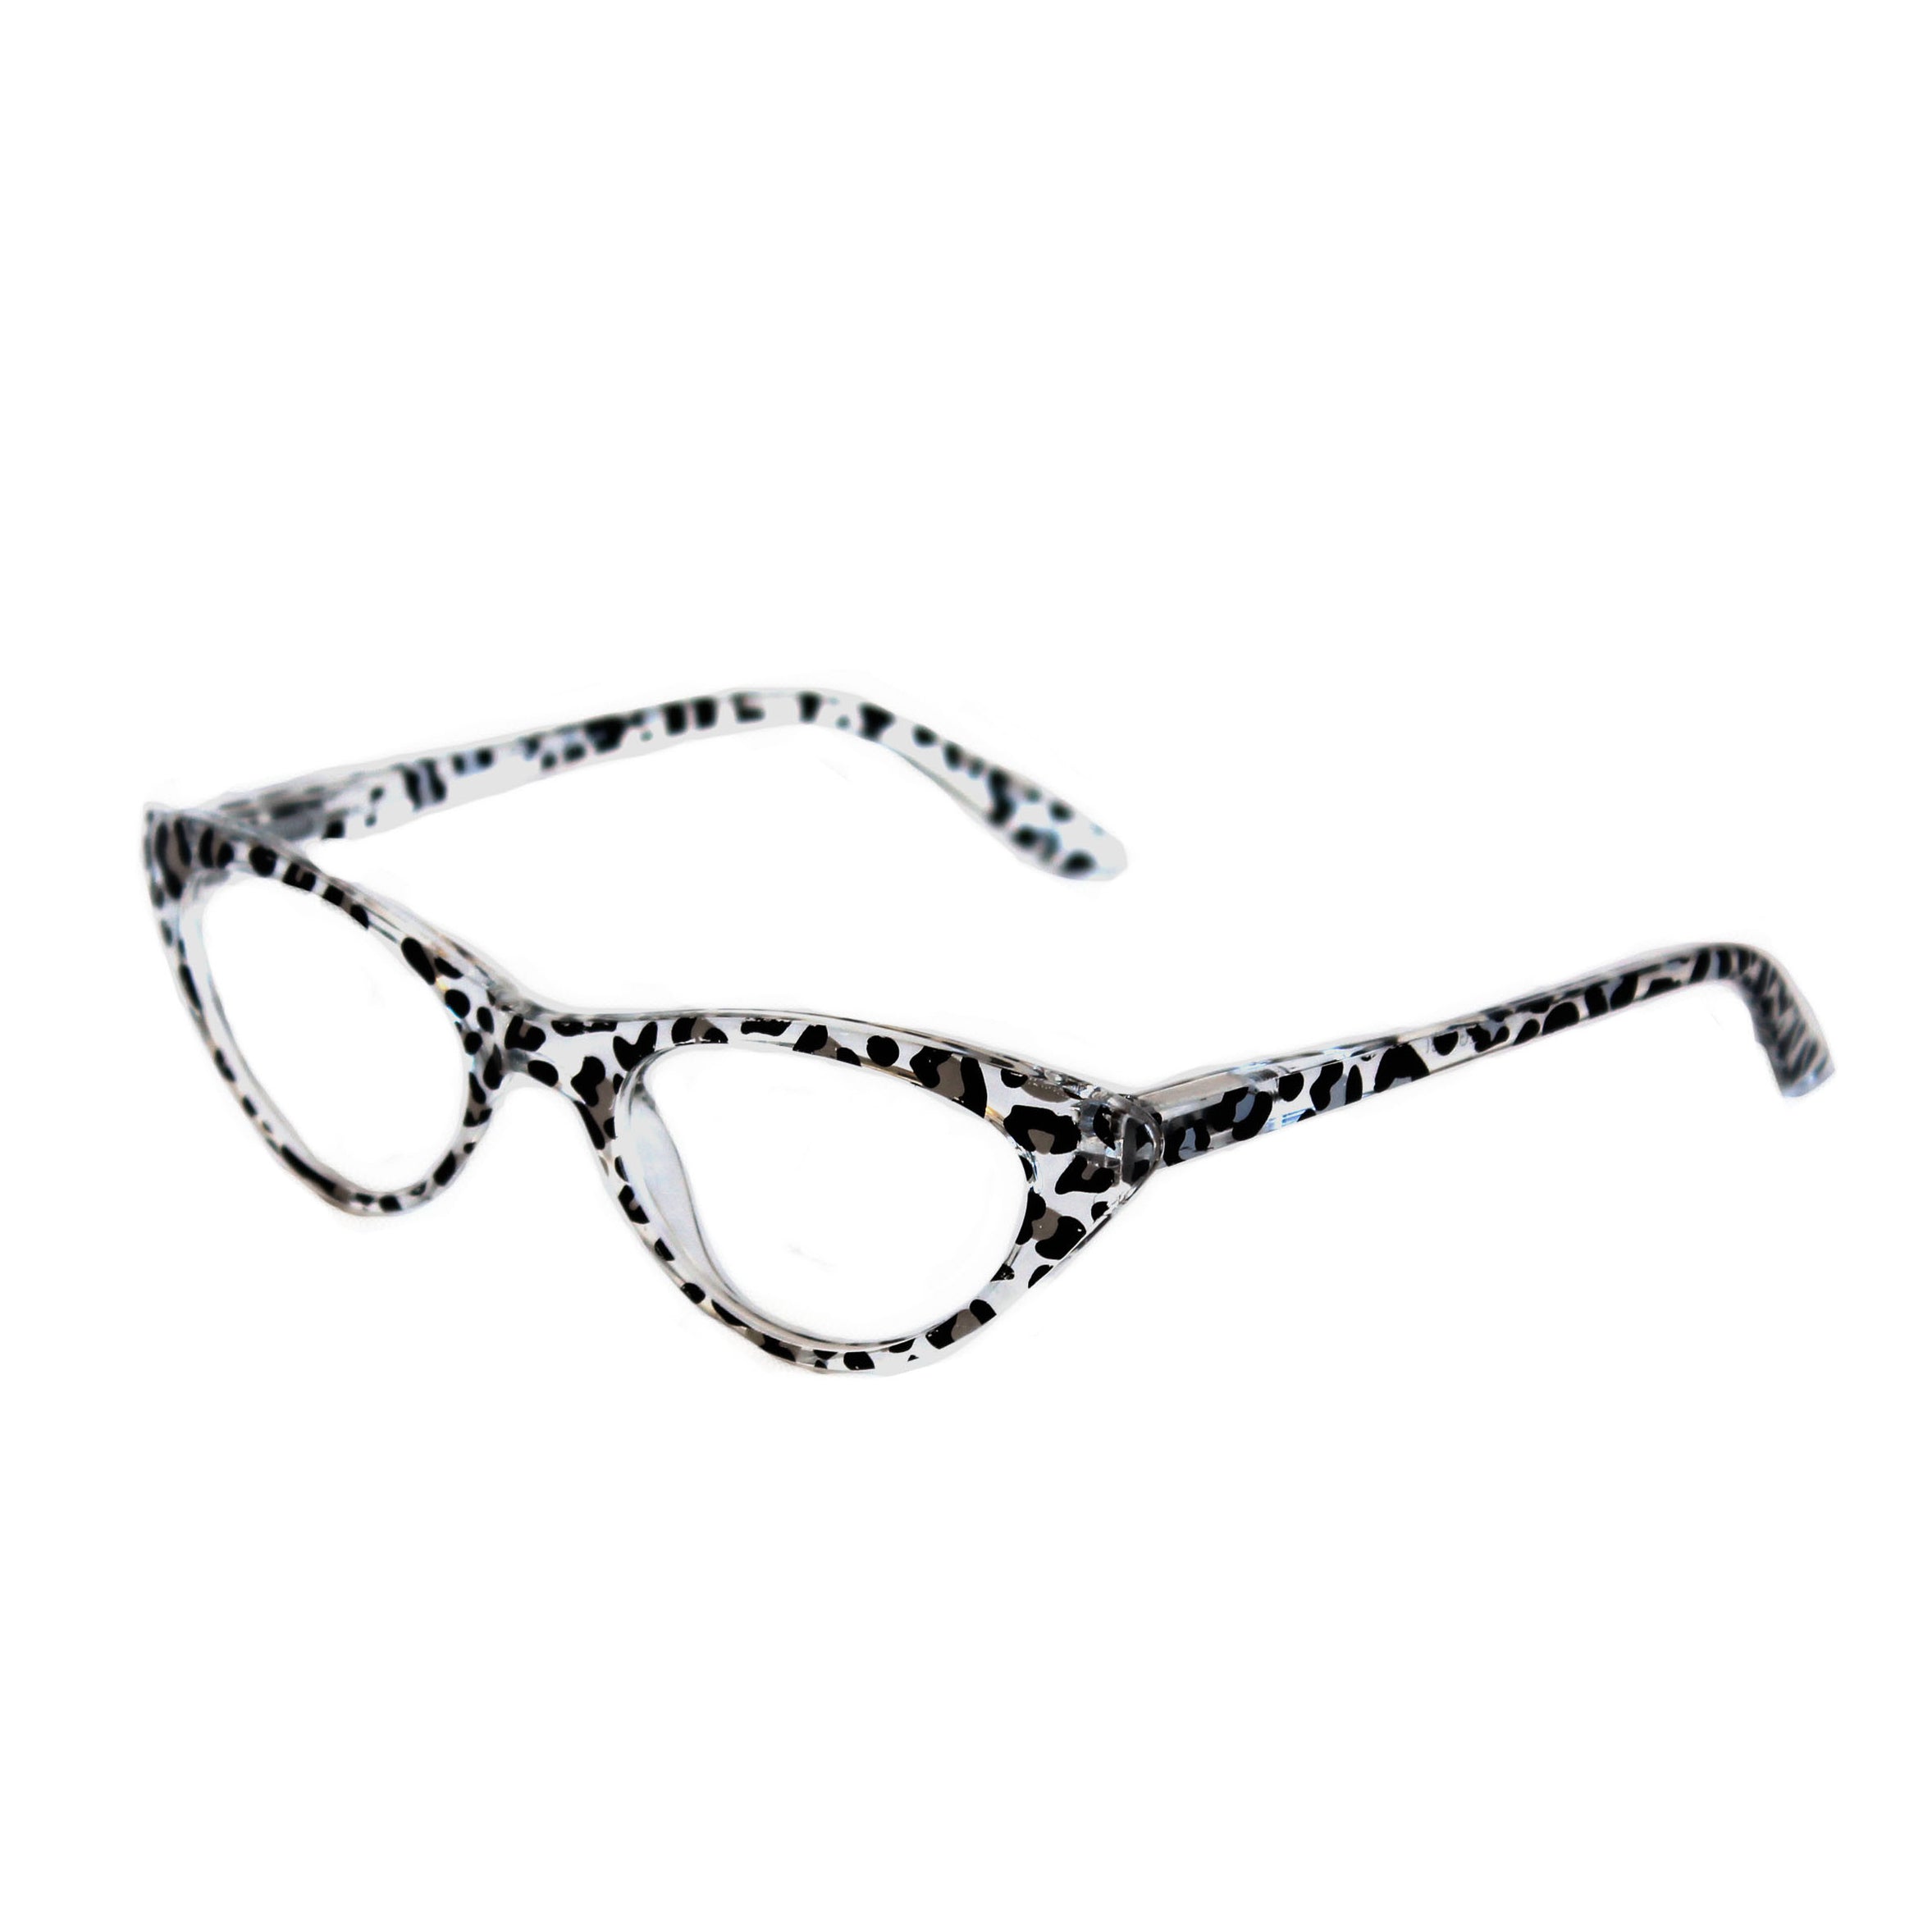 Gidget, retro 50s style snow leopard cateye glasses– Retropeepers